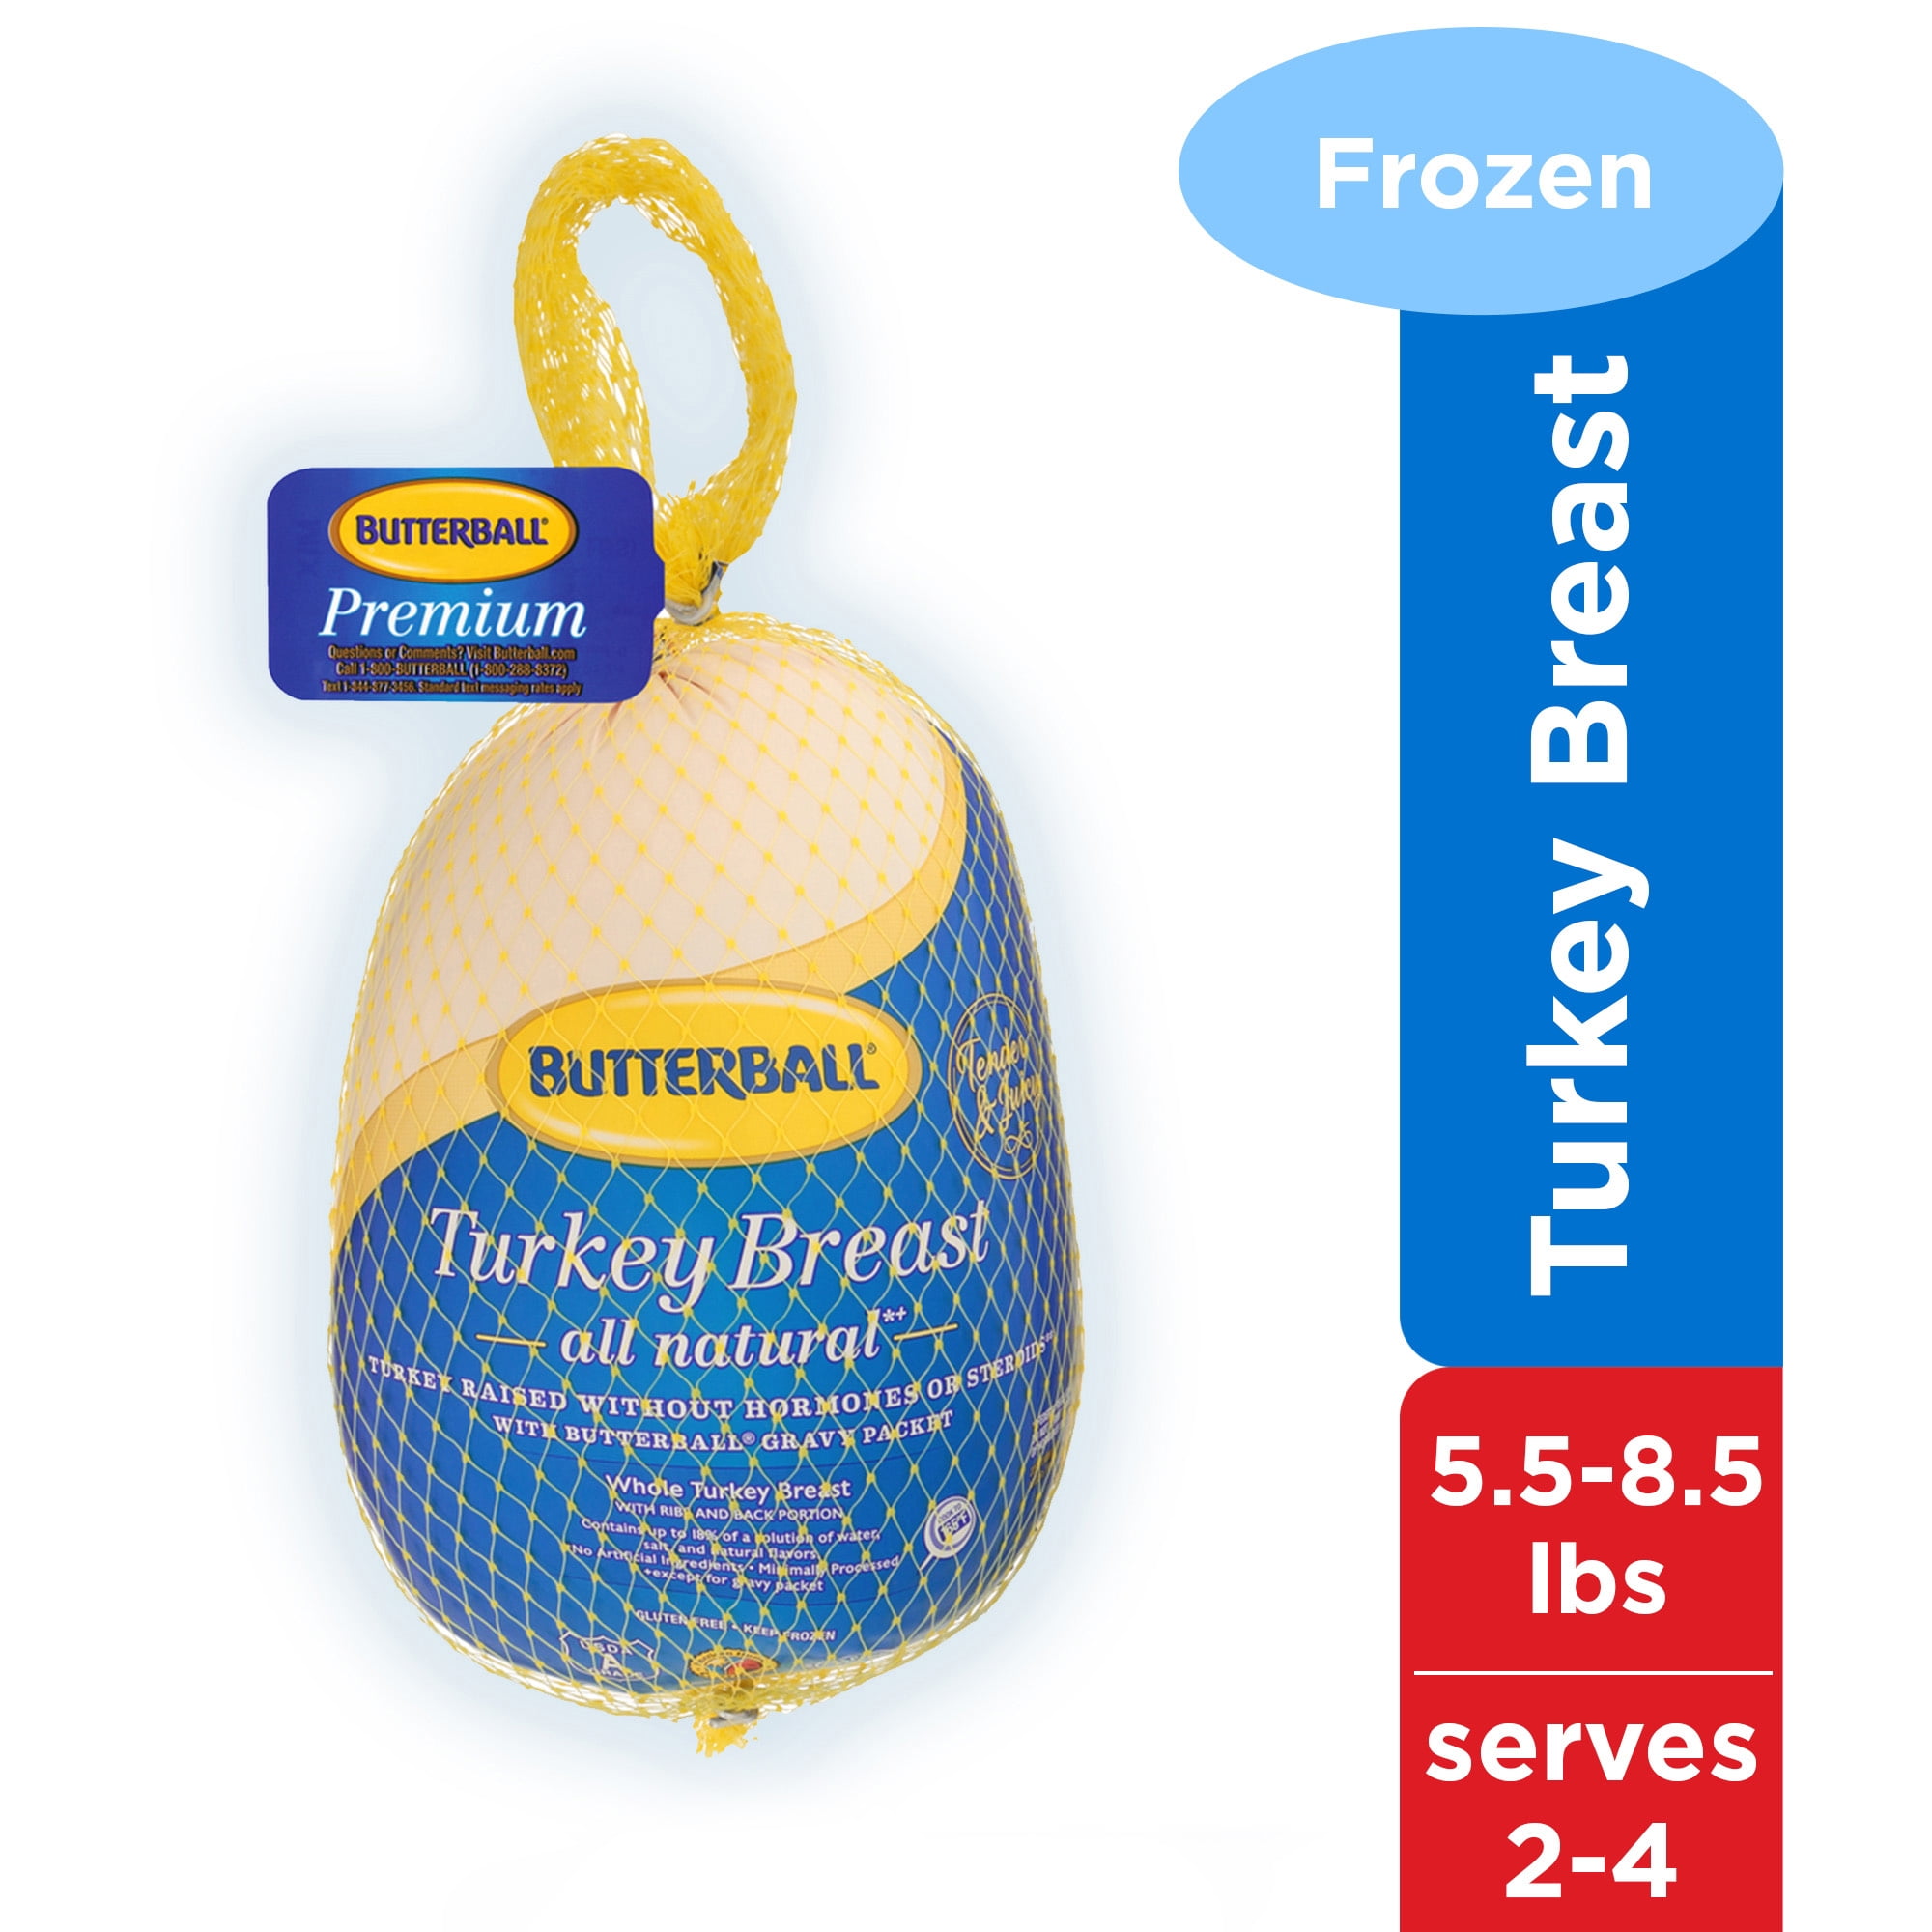 turkey butterball breast frozen whole turkeys walmart natural thanksgiving lbs